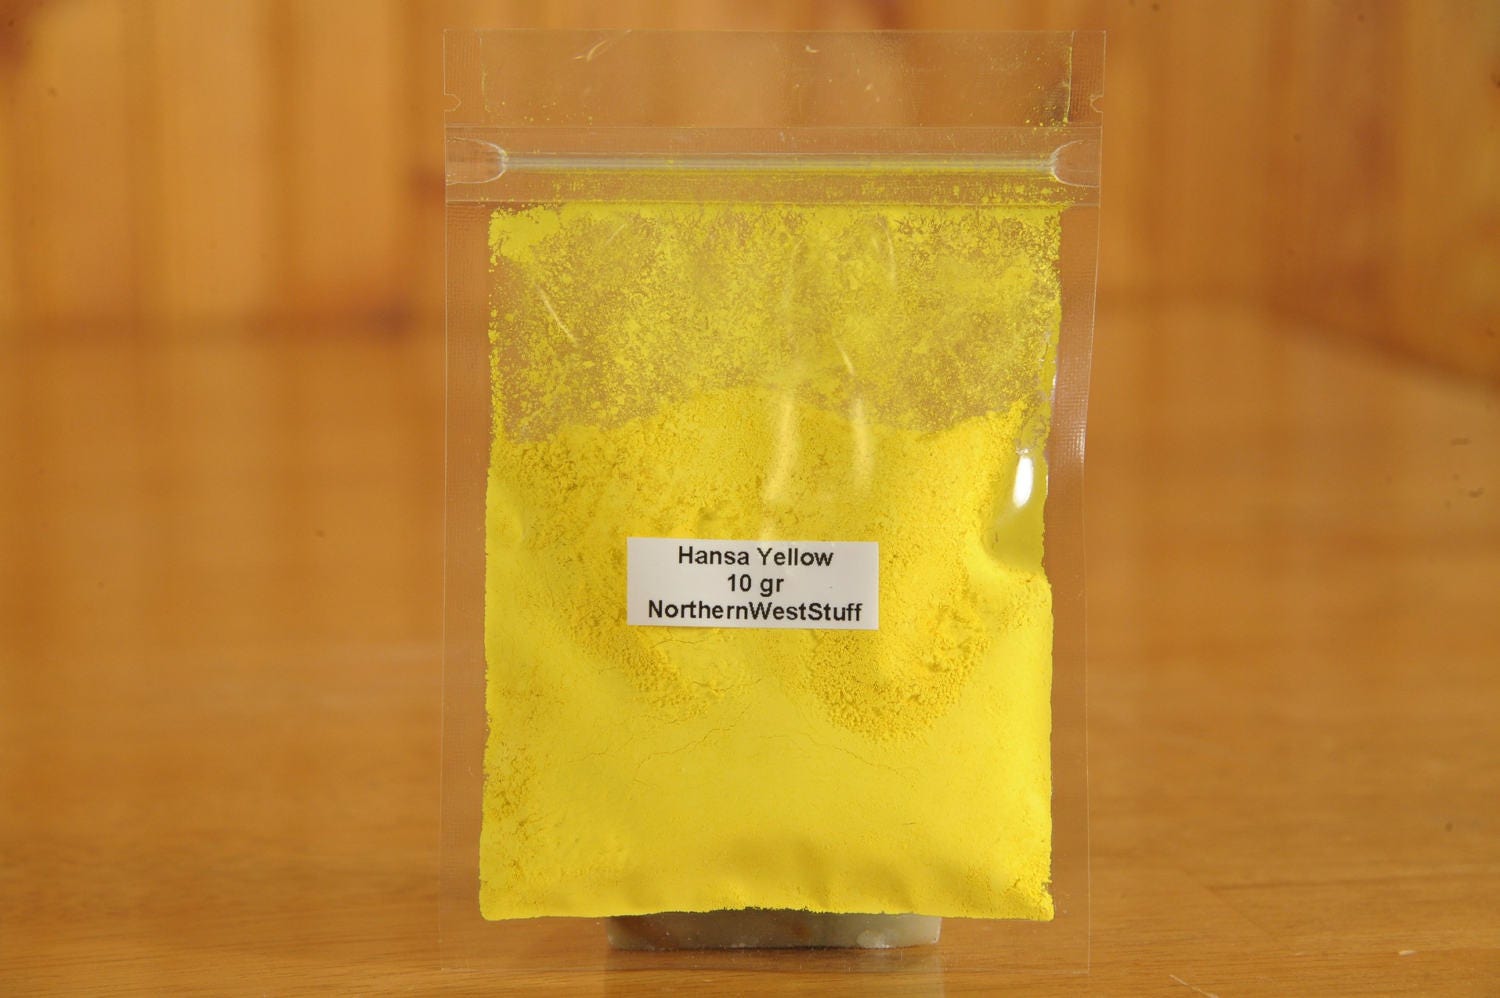 Himawari Yellow Pigment Paste / 2 oz. / RAL 1023 – Eye Candy Pigments